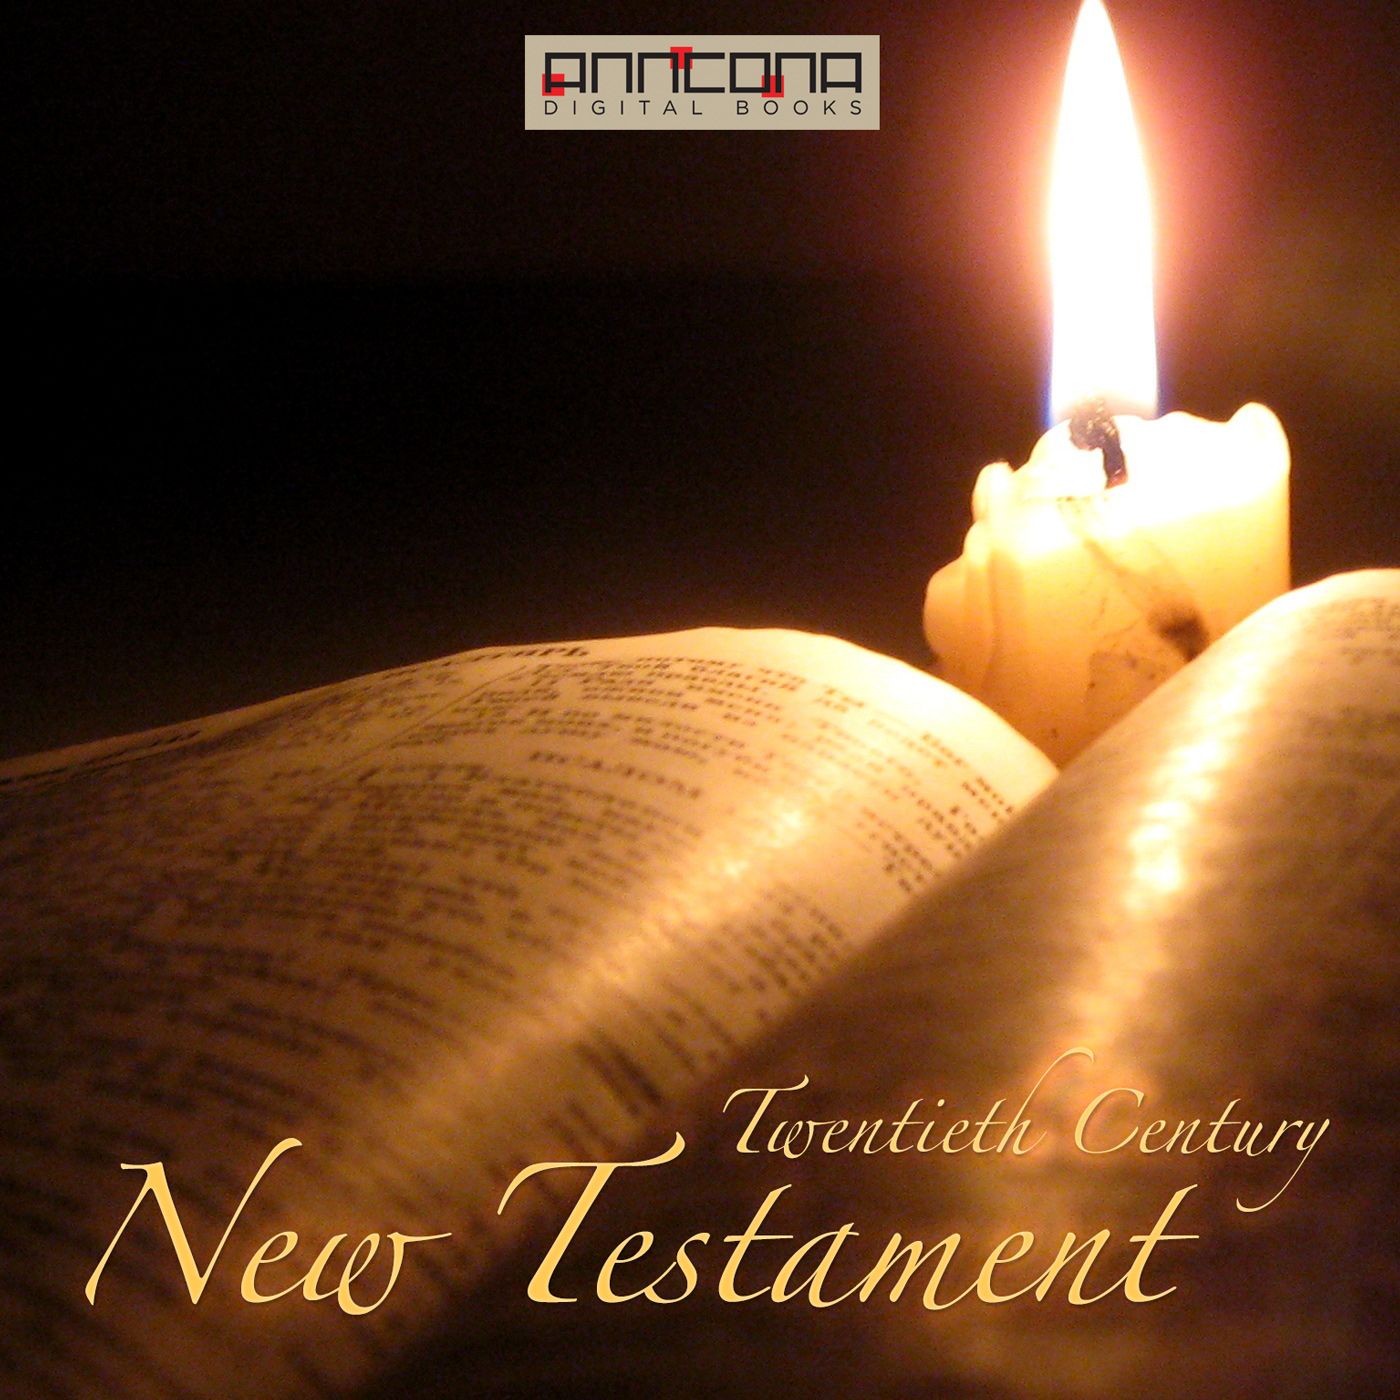 The Bible - 20th Century New Testament, ljudbok av Fenton John Anthony Hort, Brooke Foss, Westcott